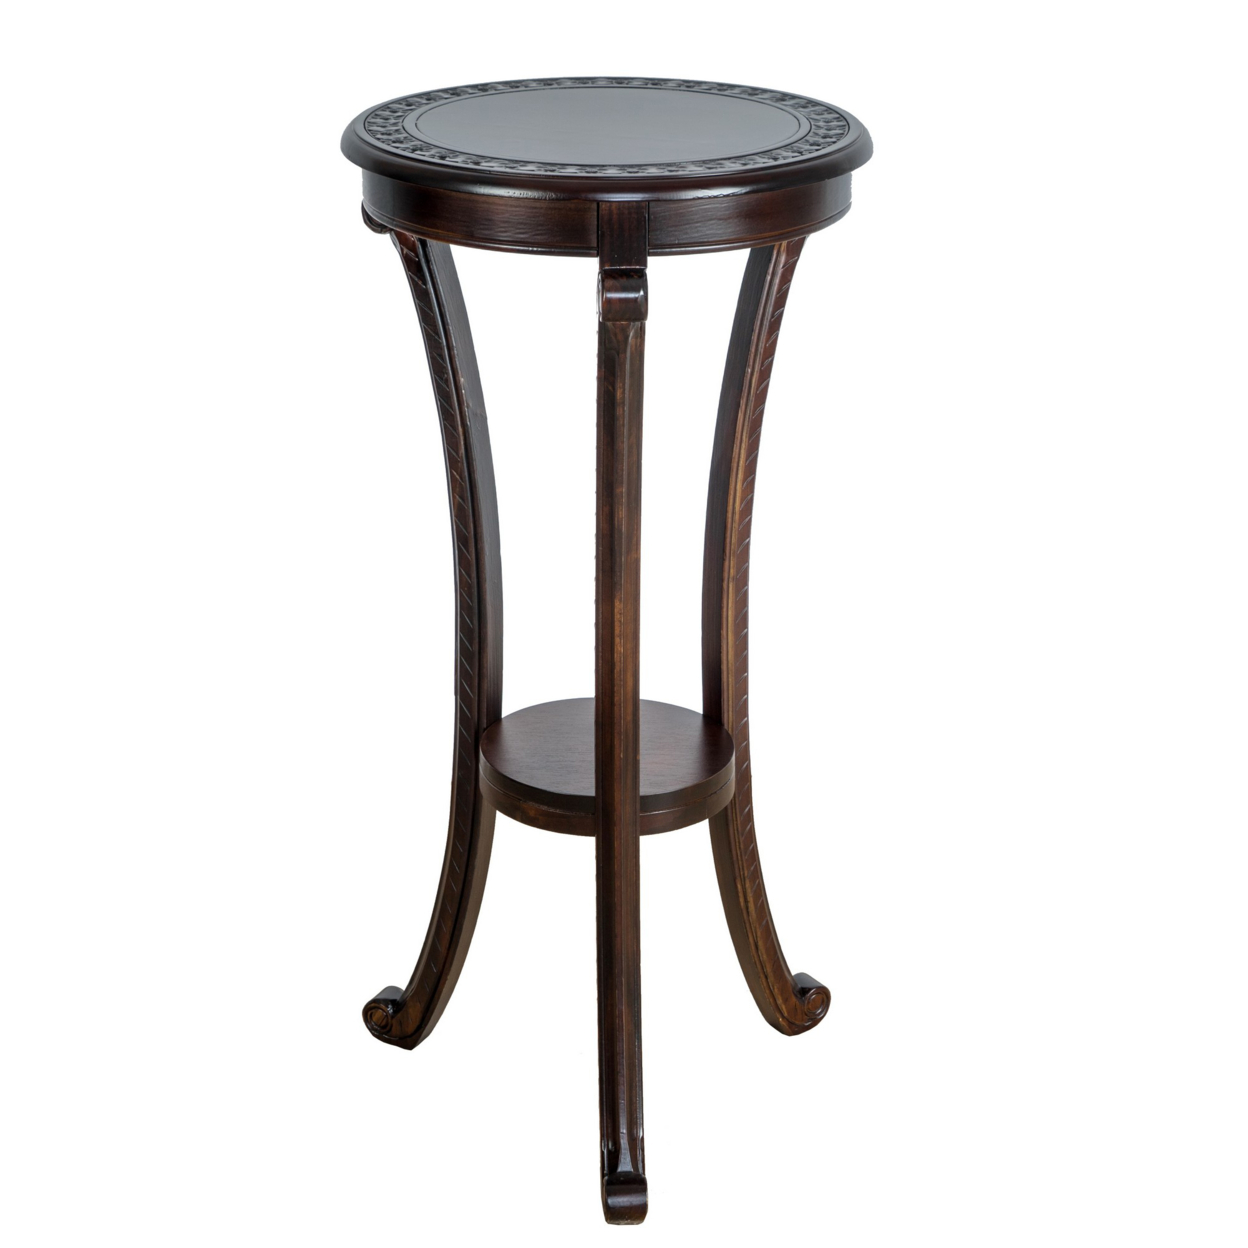 Round Wooden Pedestal Table With Open Shelf, Brown- Saltoro Sherpi